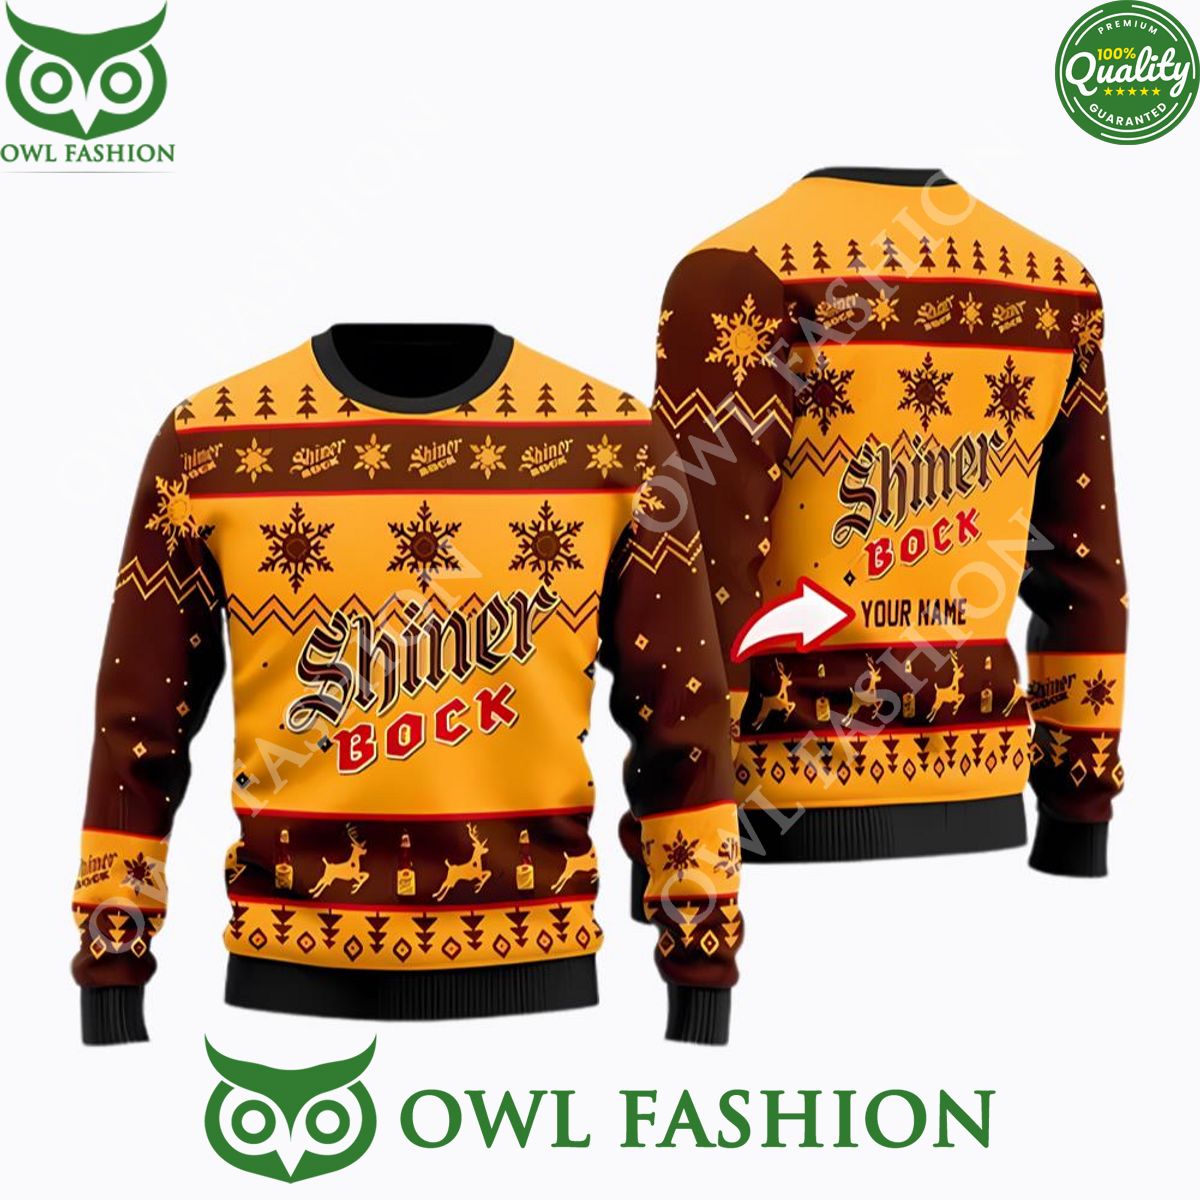 shiner bock beer personalized christmas sweater jumpers 1 QLrsa.jpg